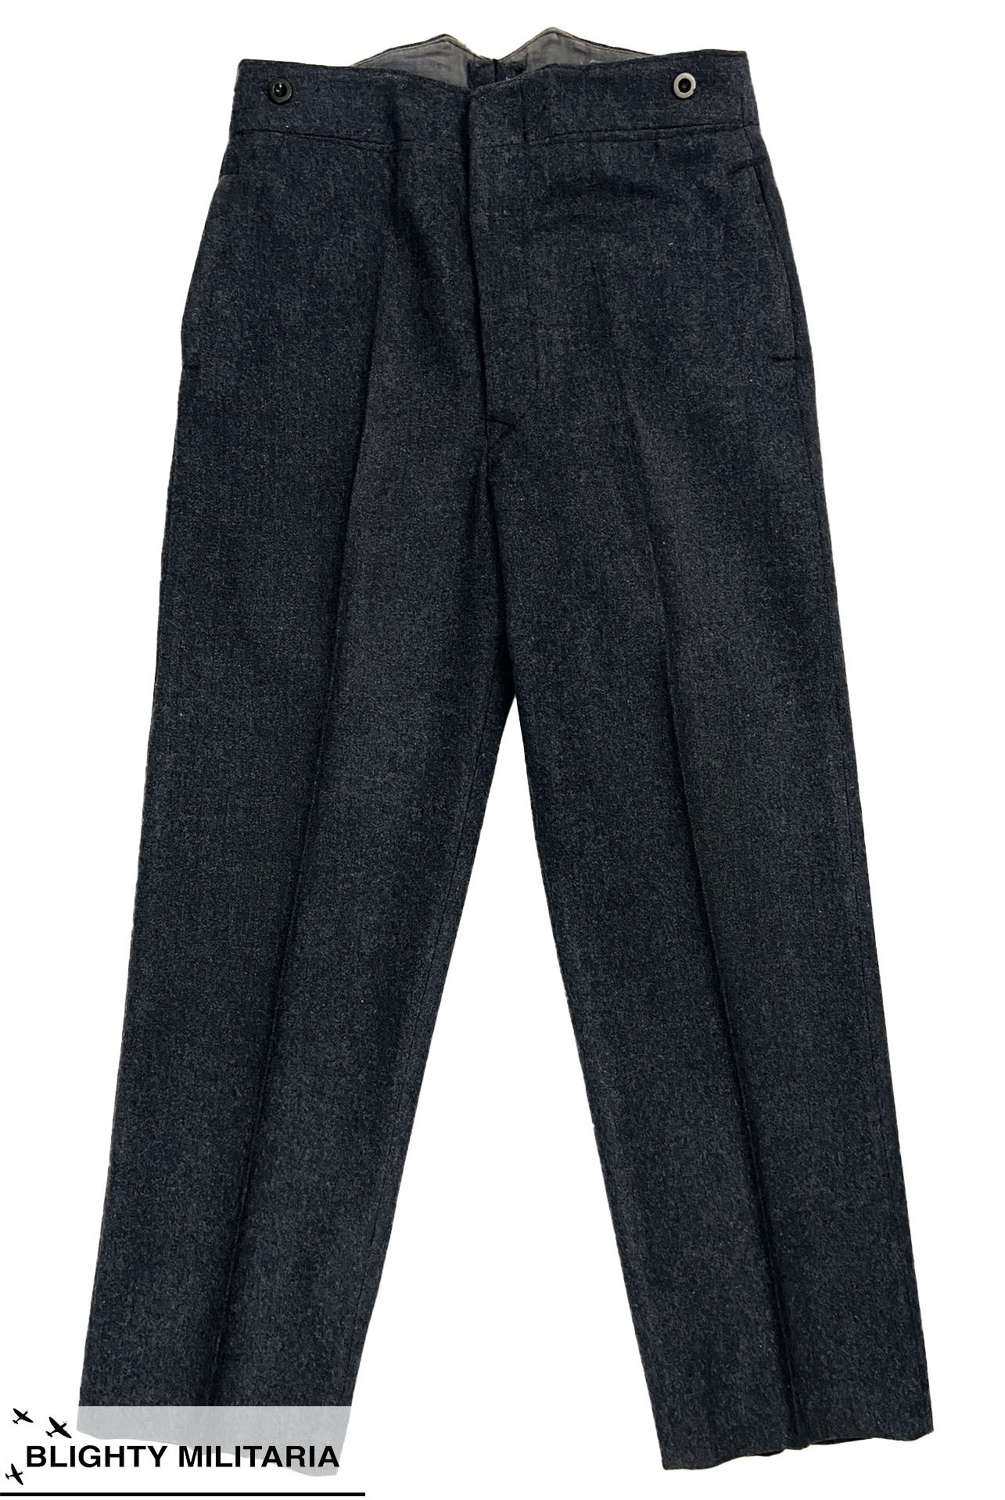 Original RAF Ordinary Airman's Trousers - Size 33x30